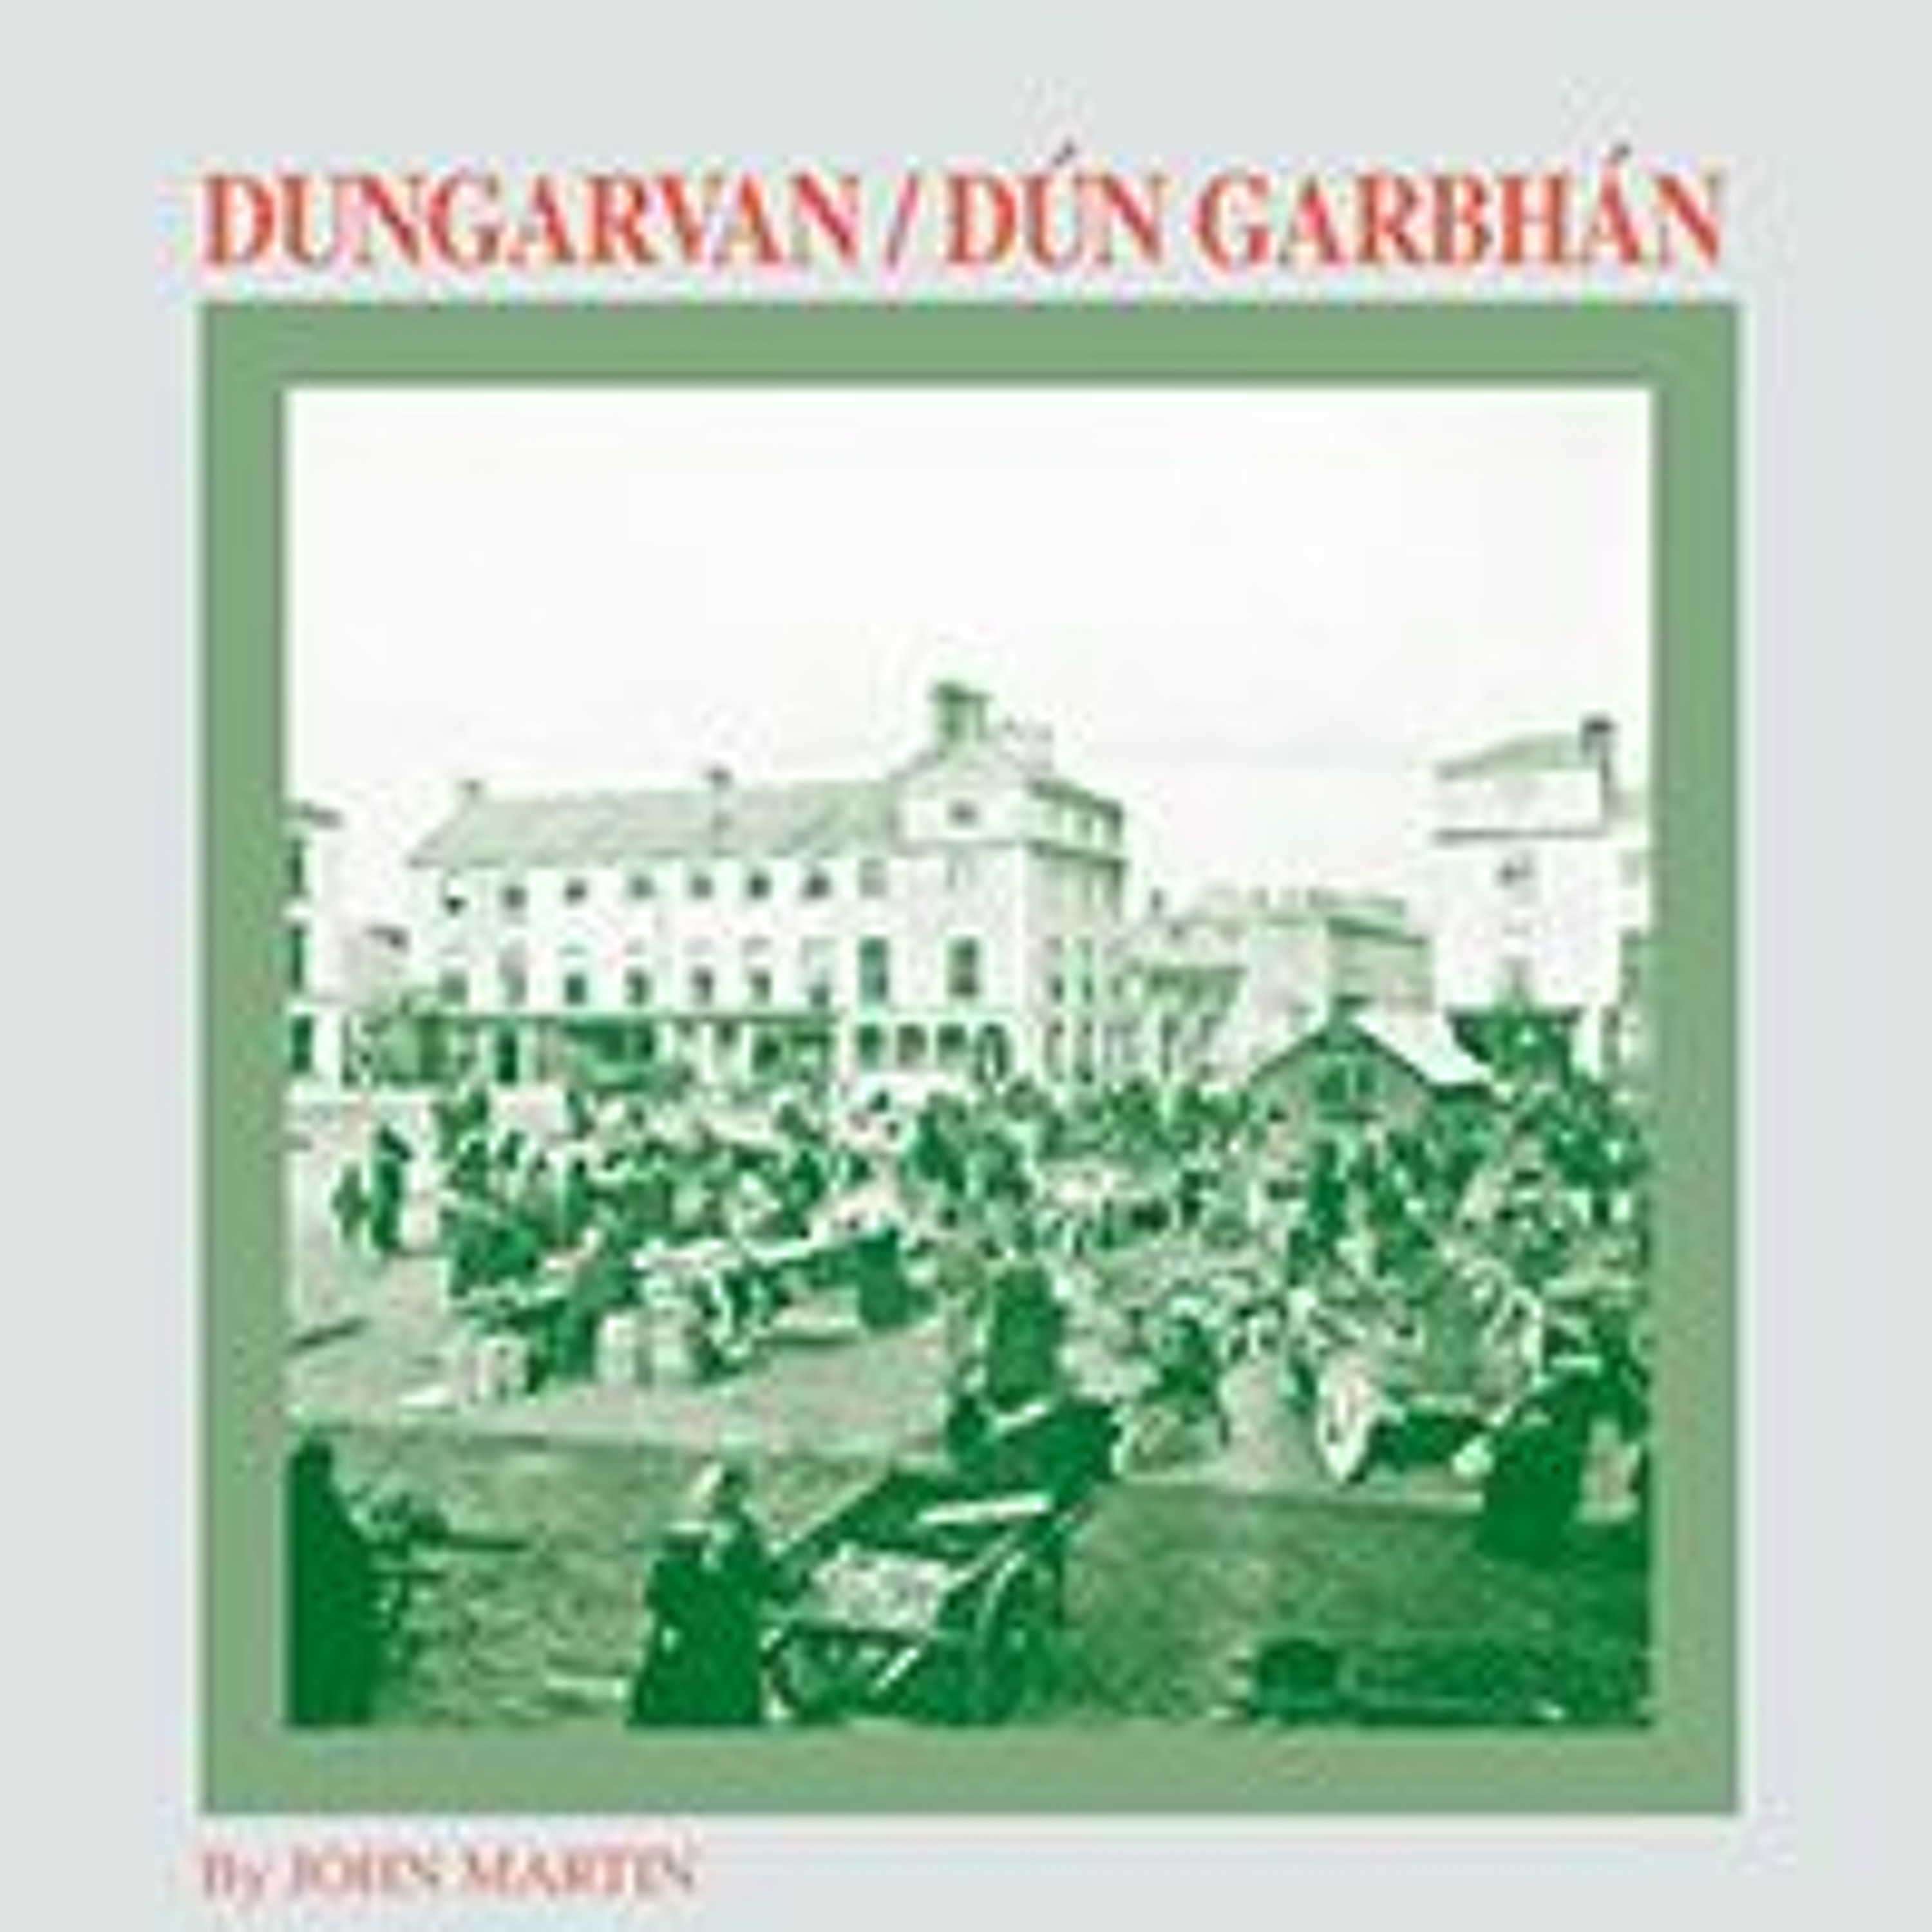 Interview with John Martin, author Irish Historic Towns Atlas, no. 30, Dungarvan/Dún Garbhán